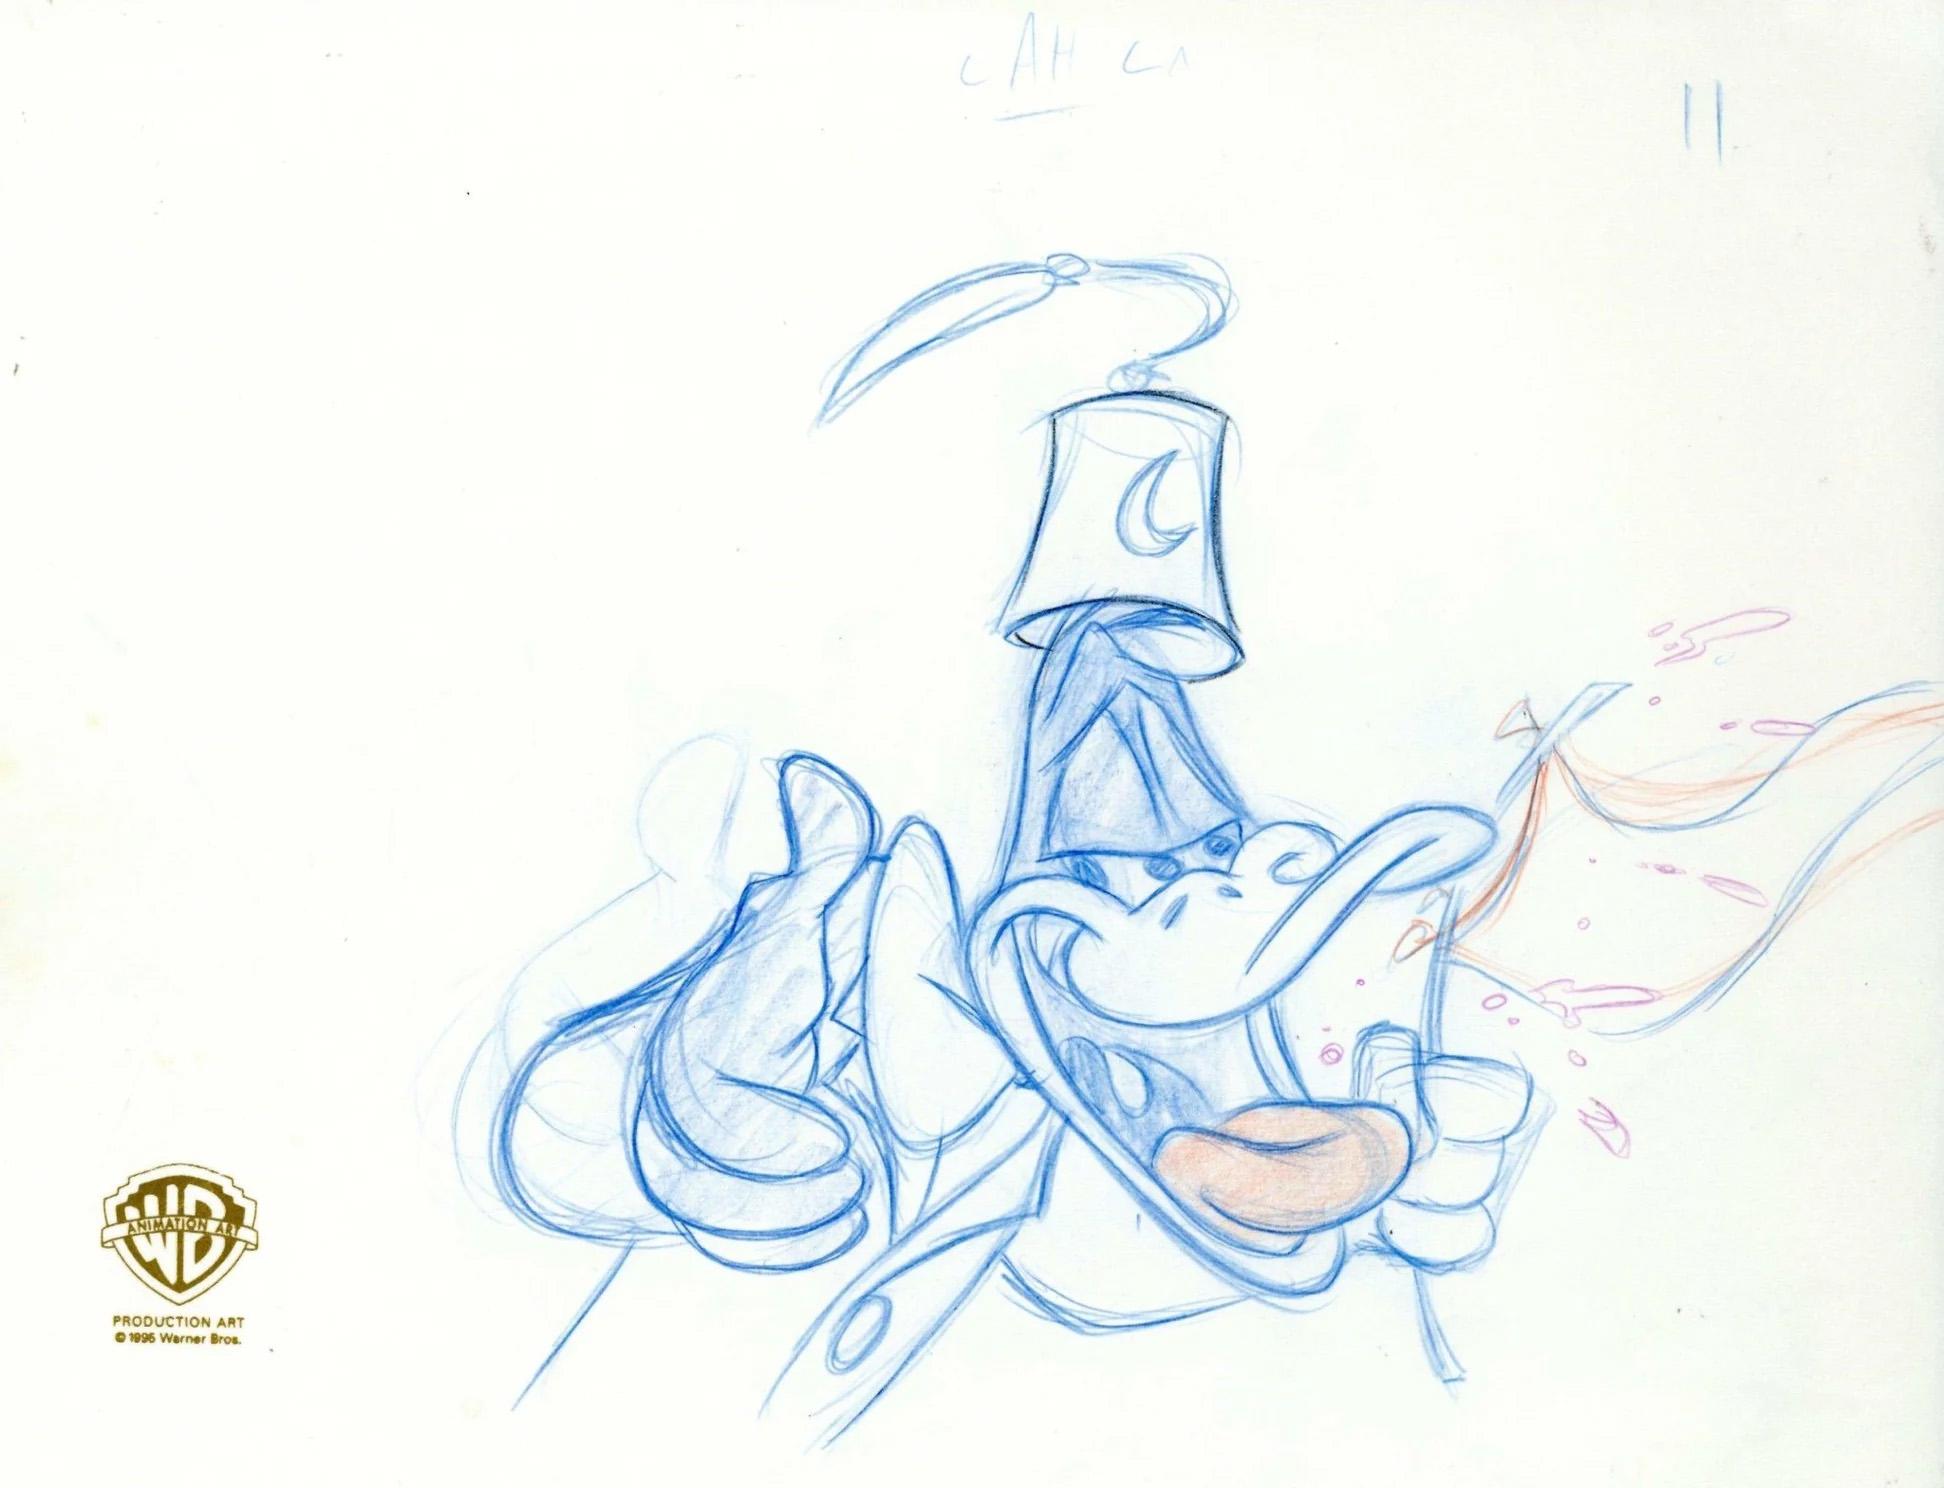 Looney Tunes - Dessin de production d'origine : Daffy Duck - Art de Looney Tunes Studio Artists